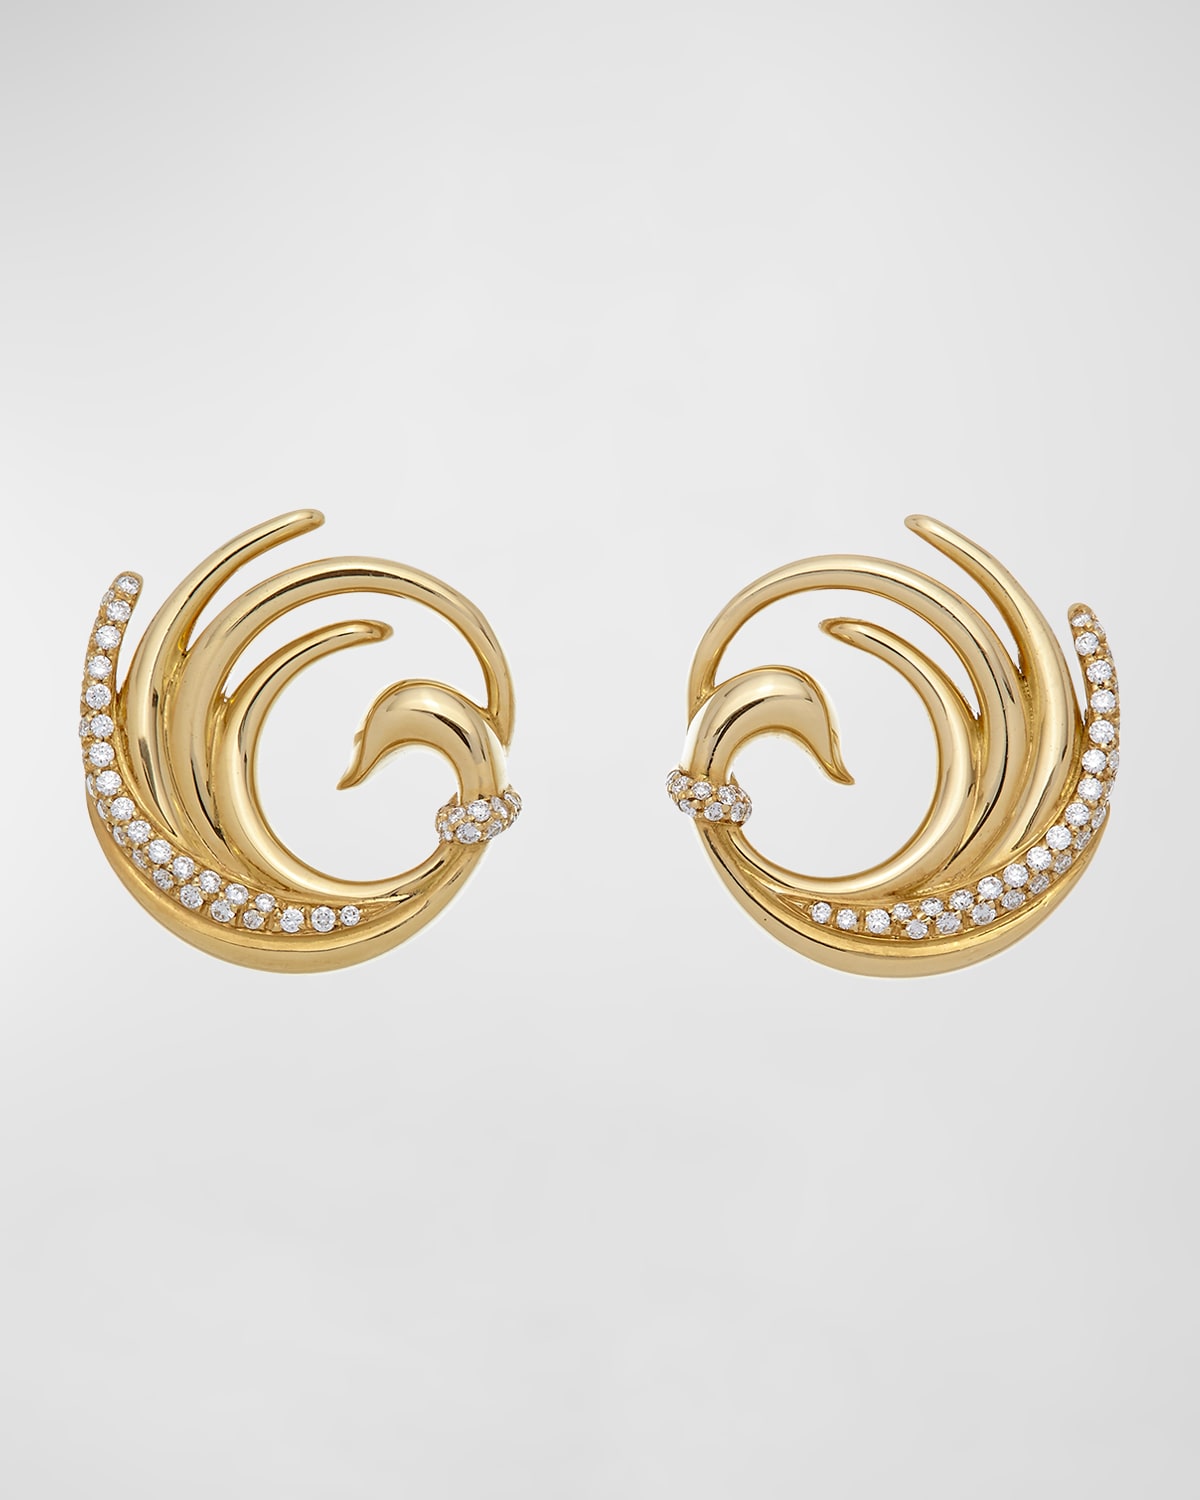 18K Yellow Gold Swan Earrings with Diamonds